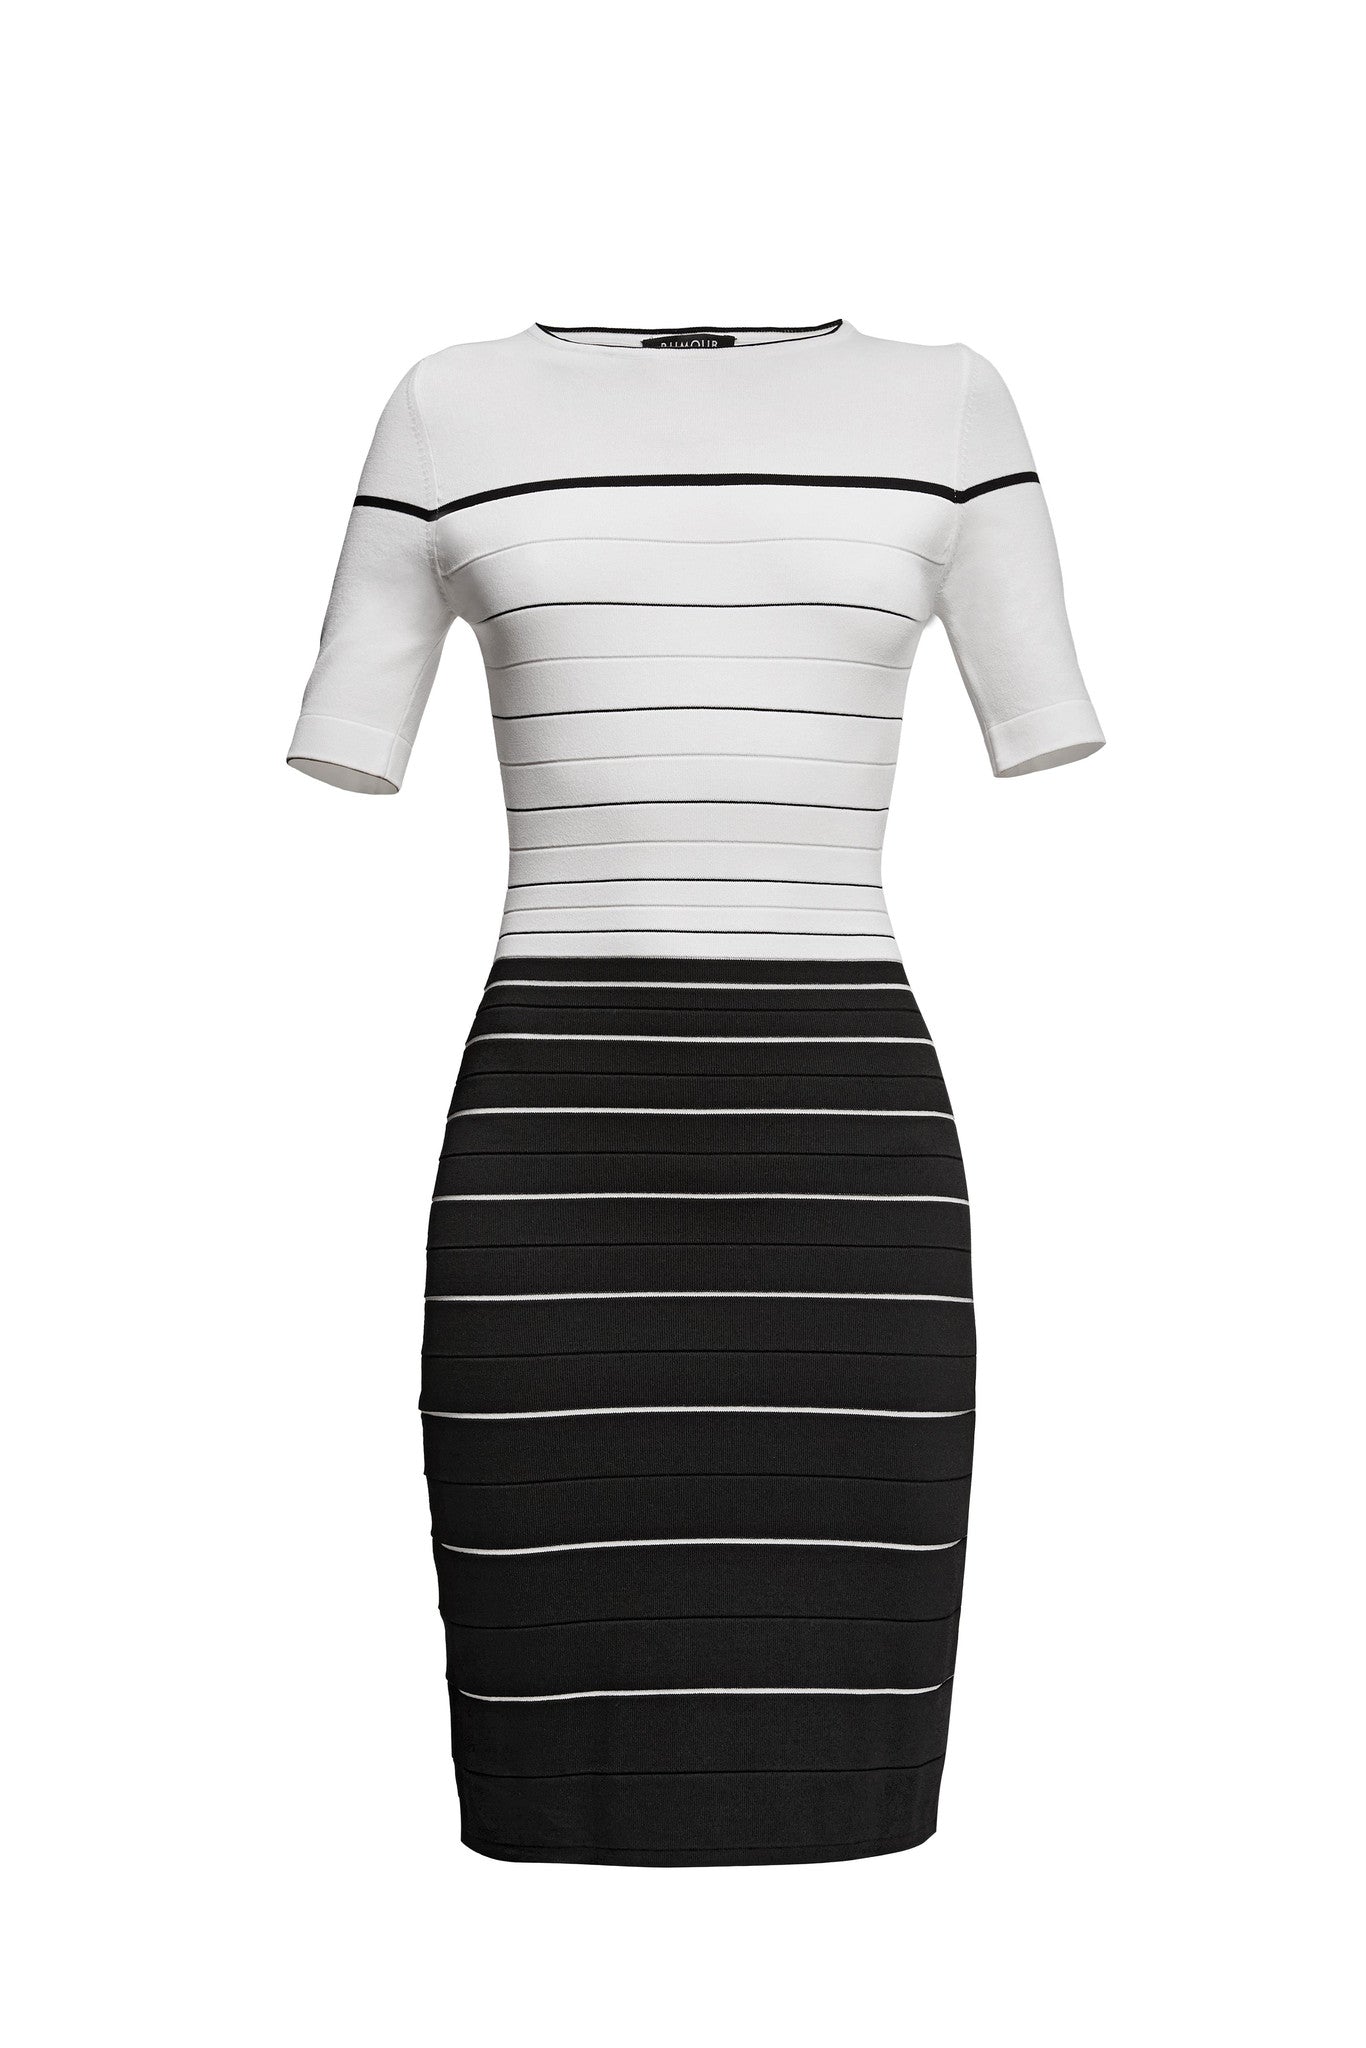 Striped Monochrome Bodycon Dress